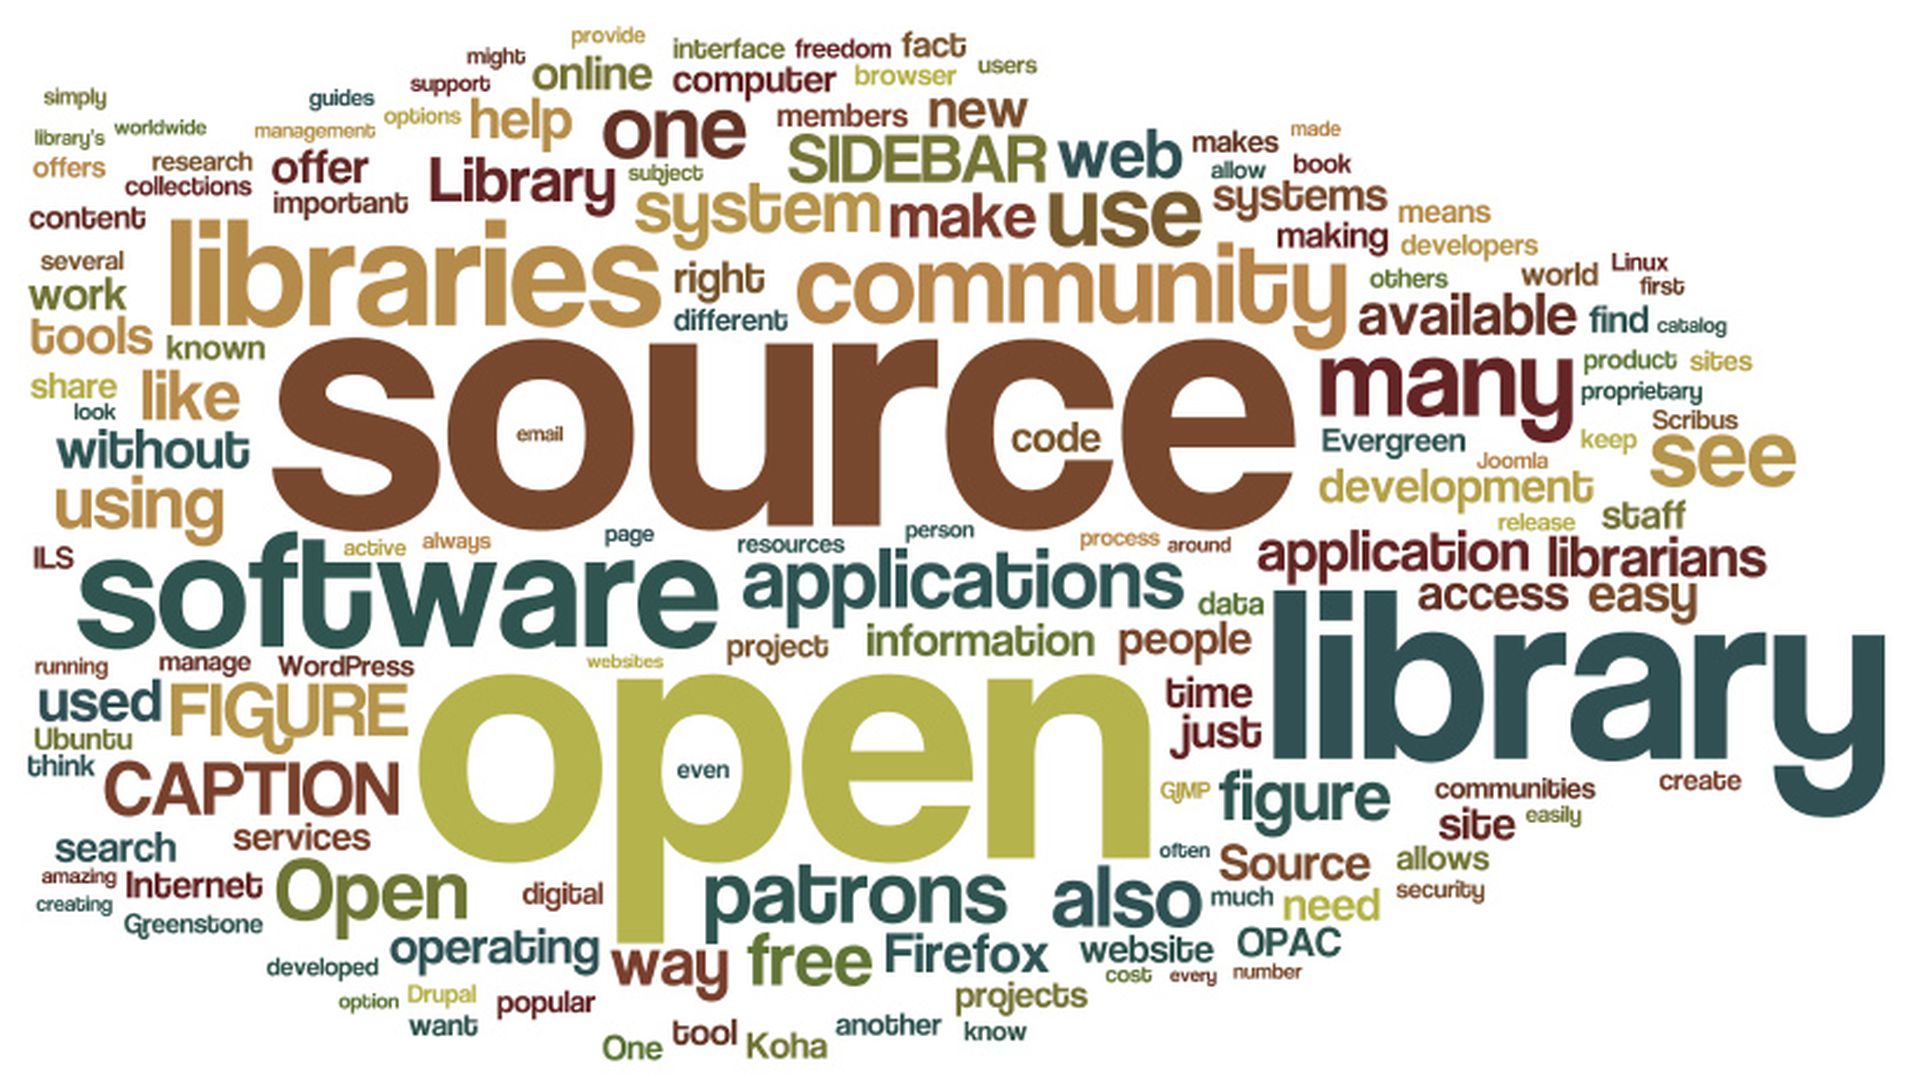 Web offer. Open source. Open source проекты. Открытое программное обеспечение. Open source логотип.